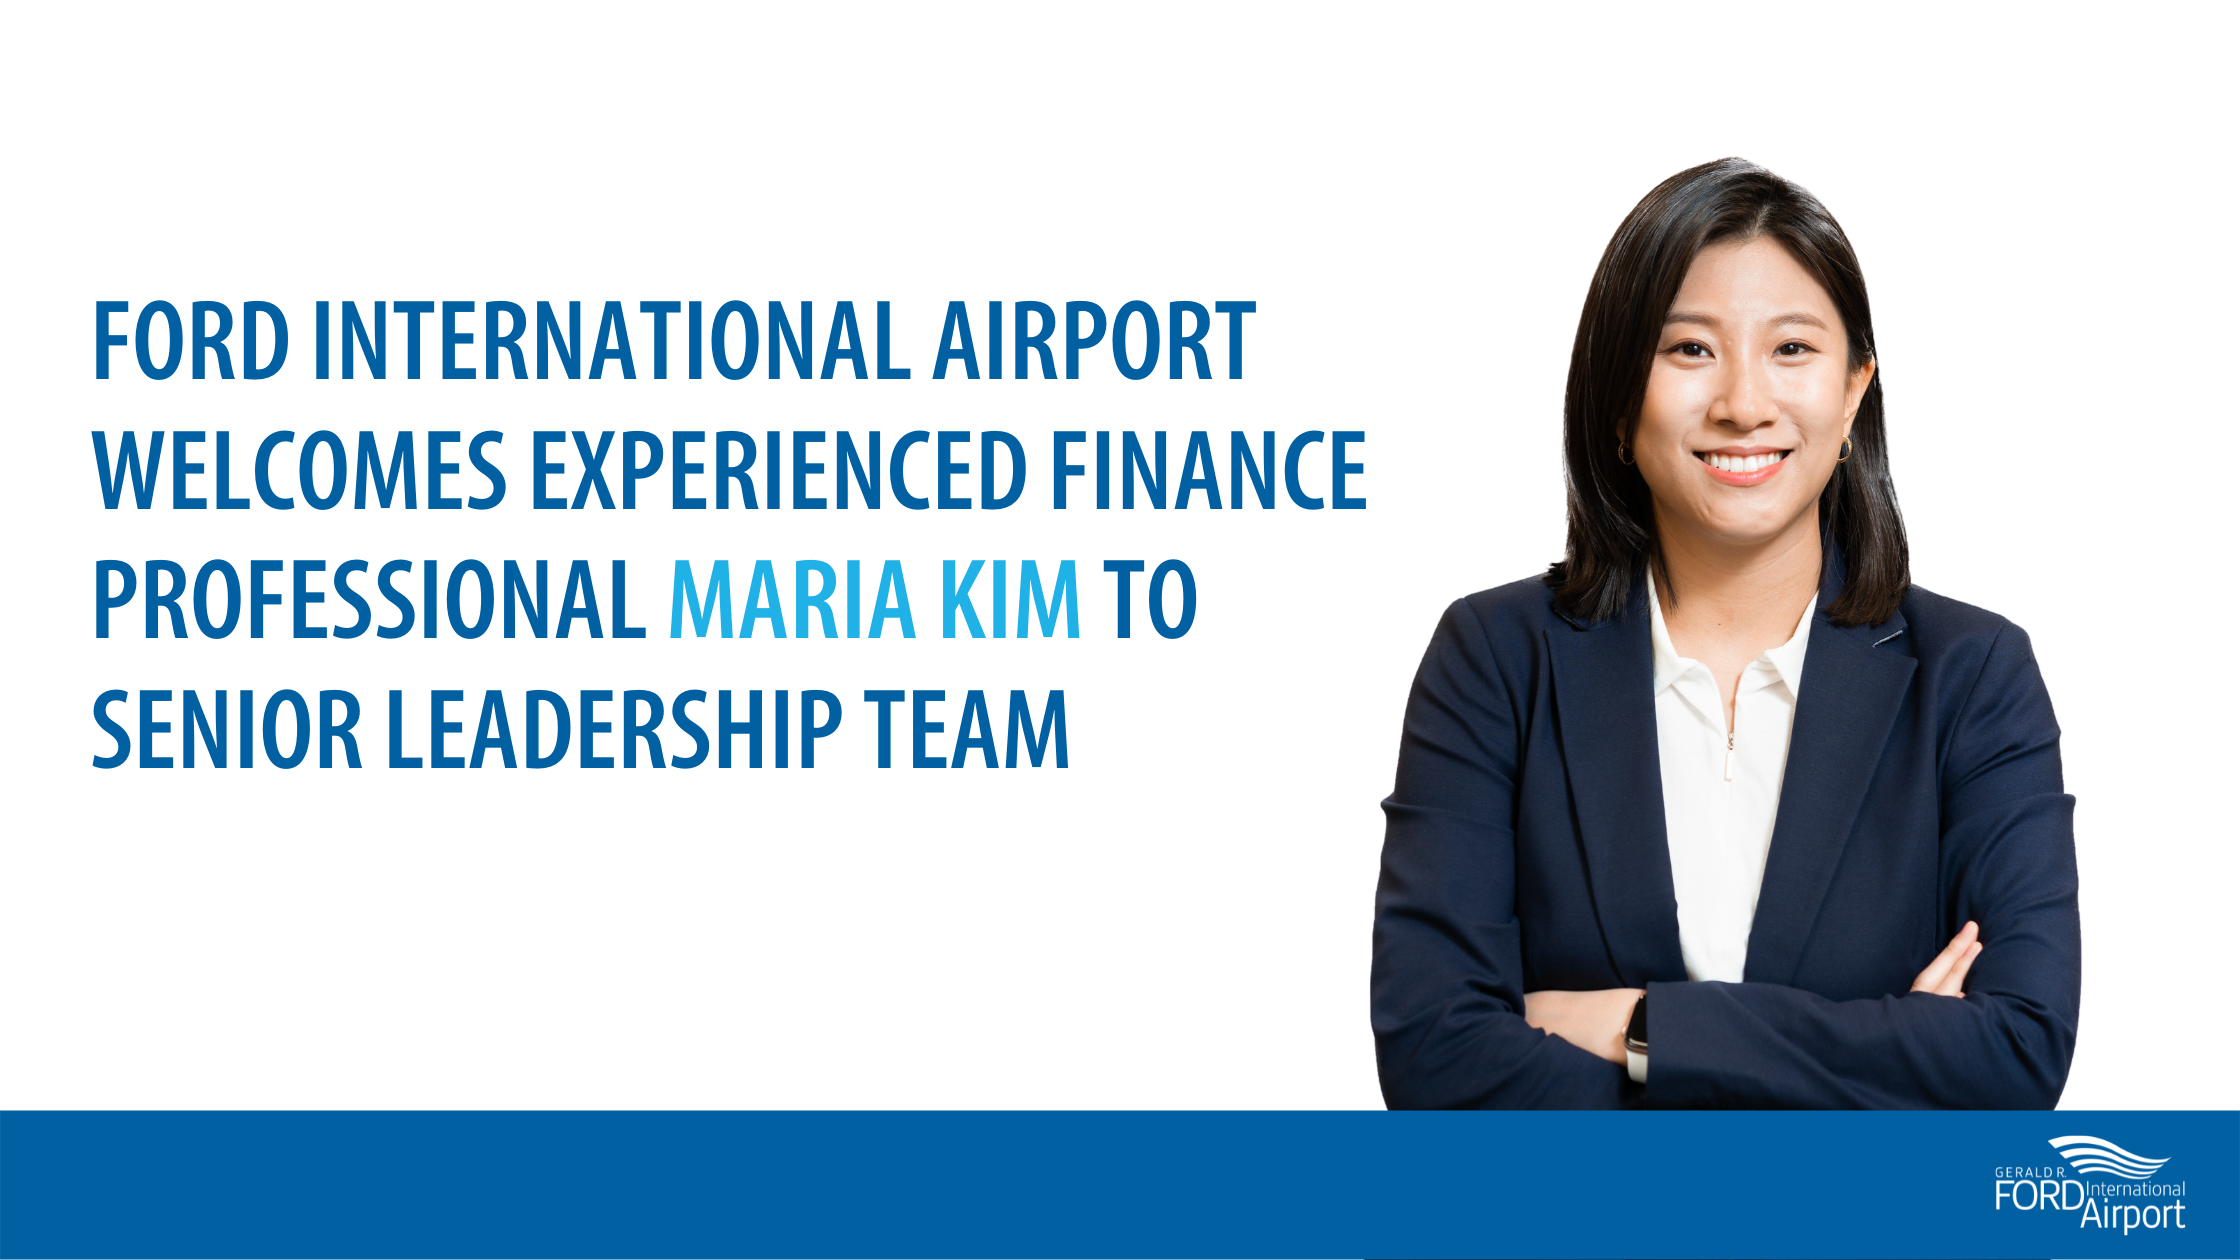 Ford International Airport Welcomes Experienced Finance Professional Maria Kim to Senior Leadership Team